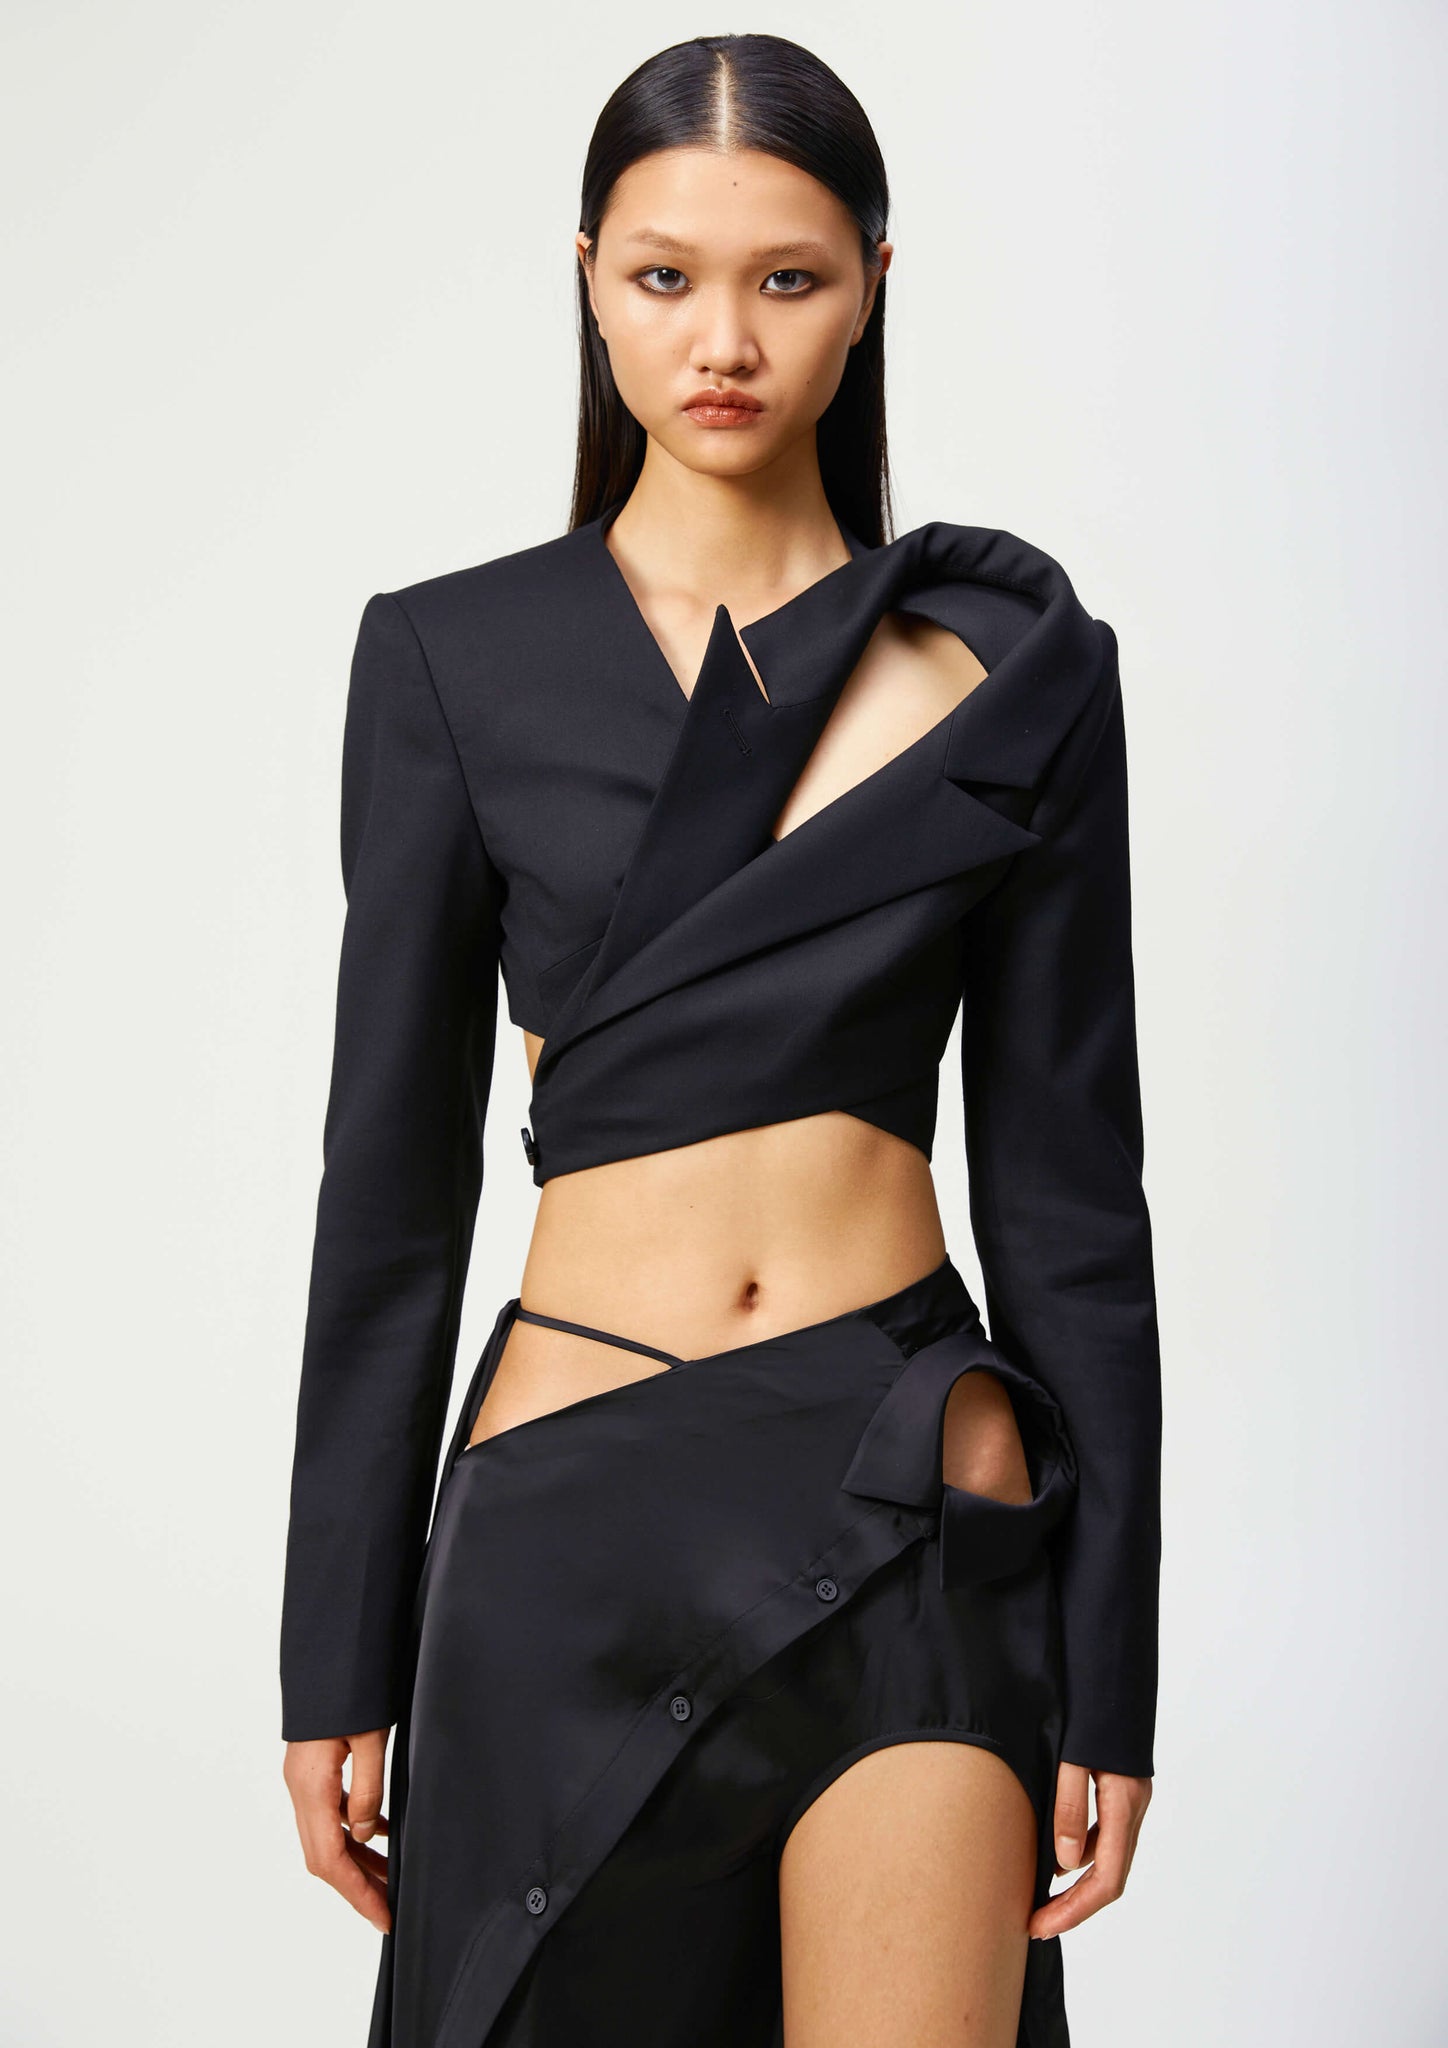 Black staggered suit jacket